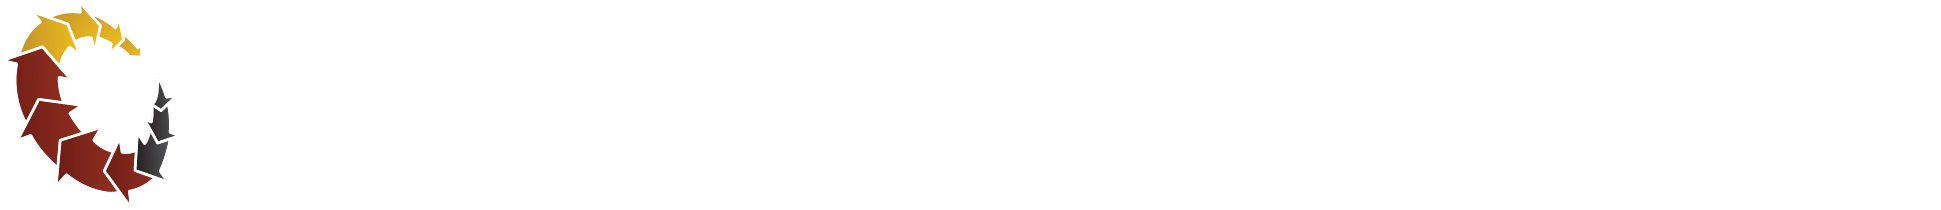 PrintTek - Print & Technology